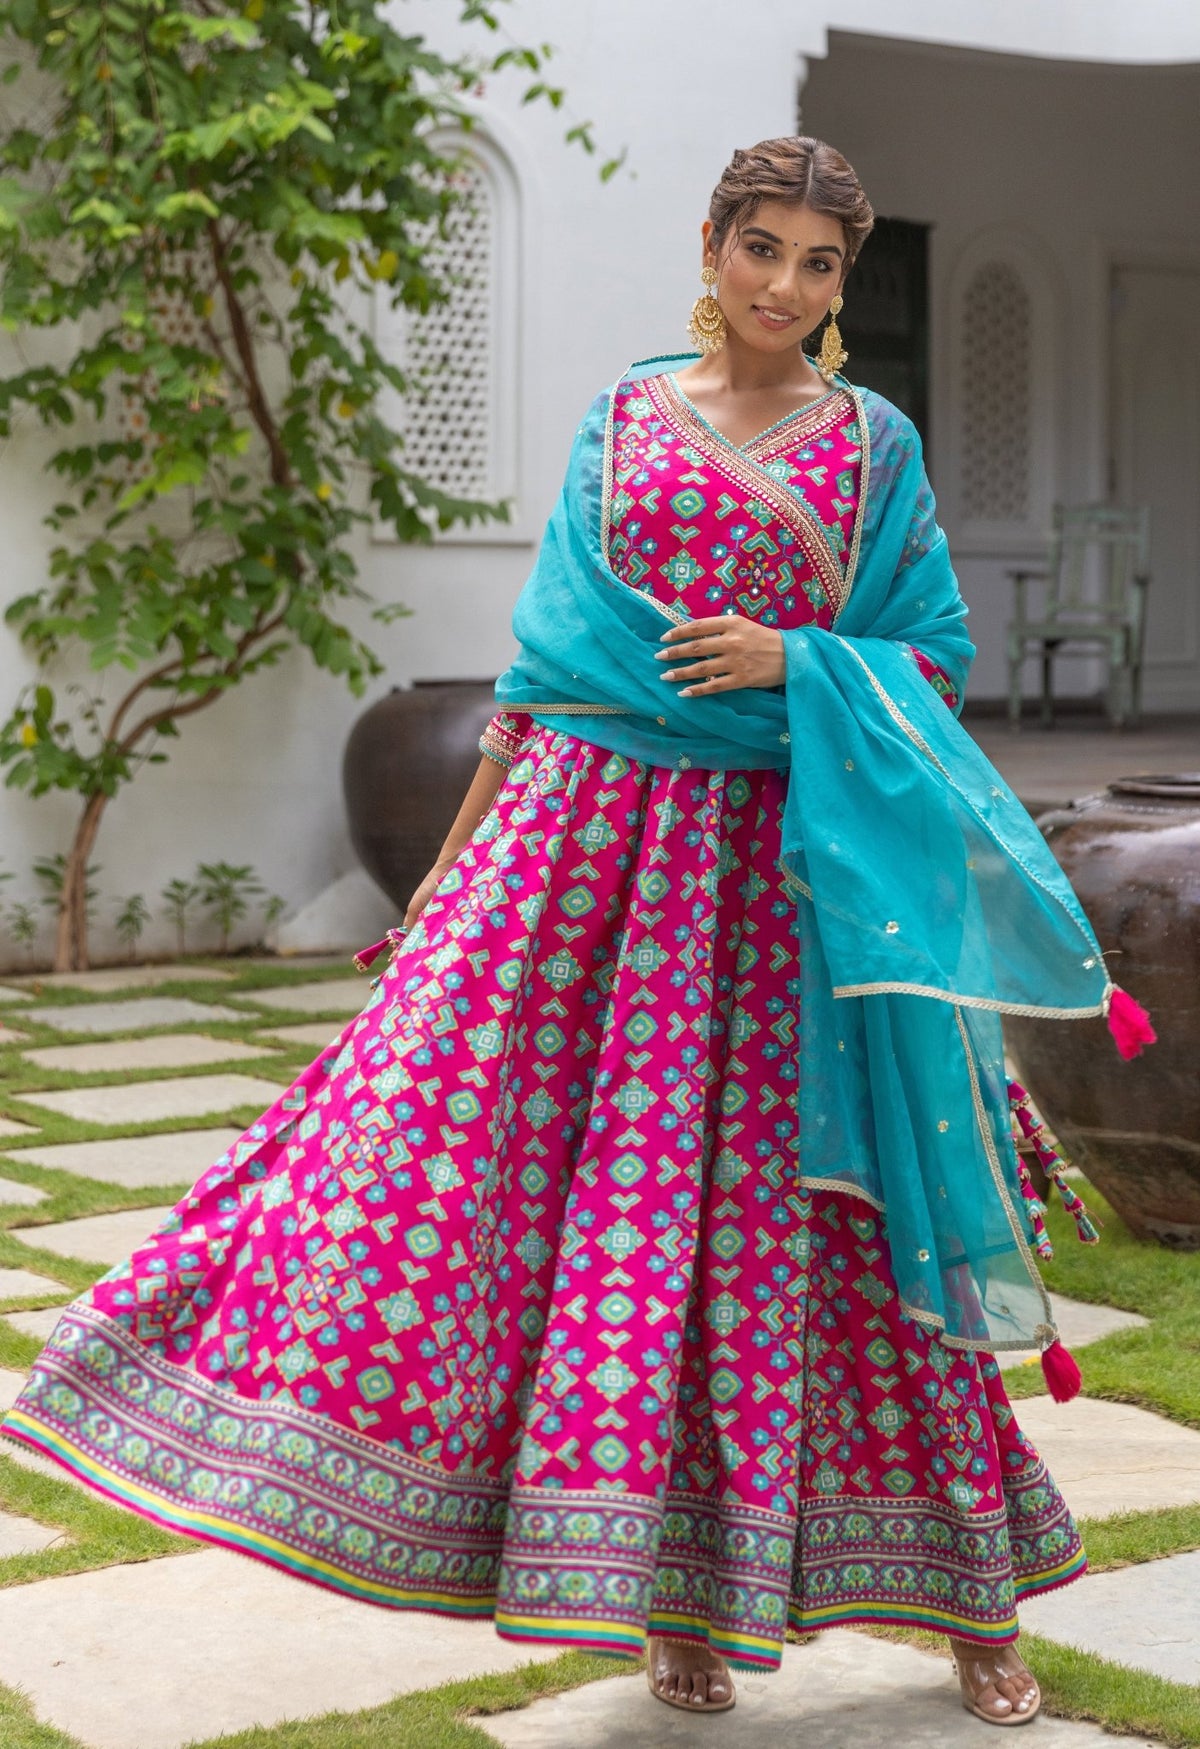 Ethnic Wear For Women Under 1000 - Buy Ethnic Wear For Women Under 1000  online in India